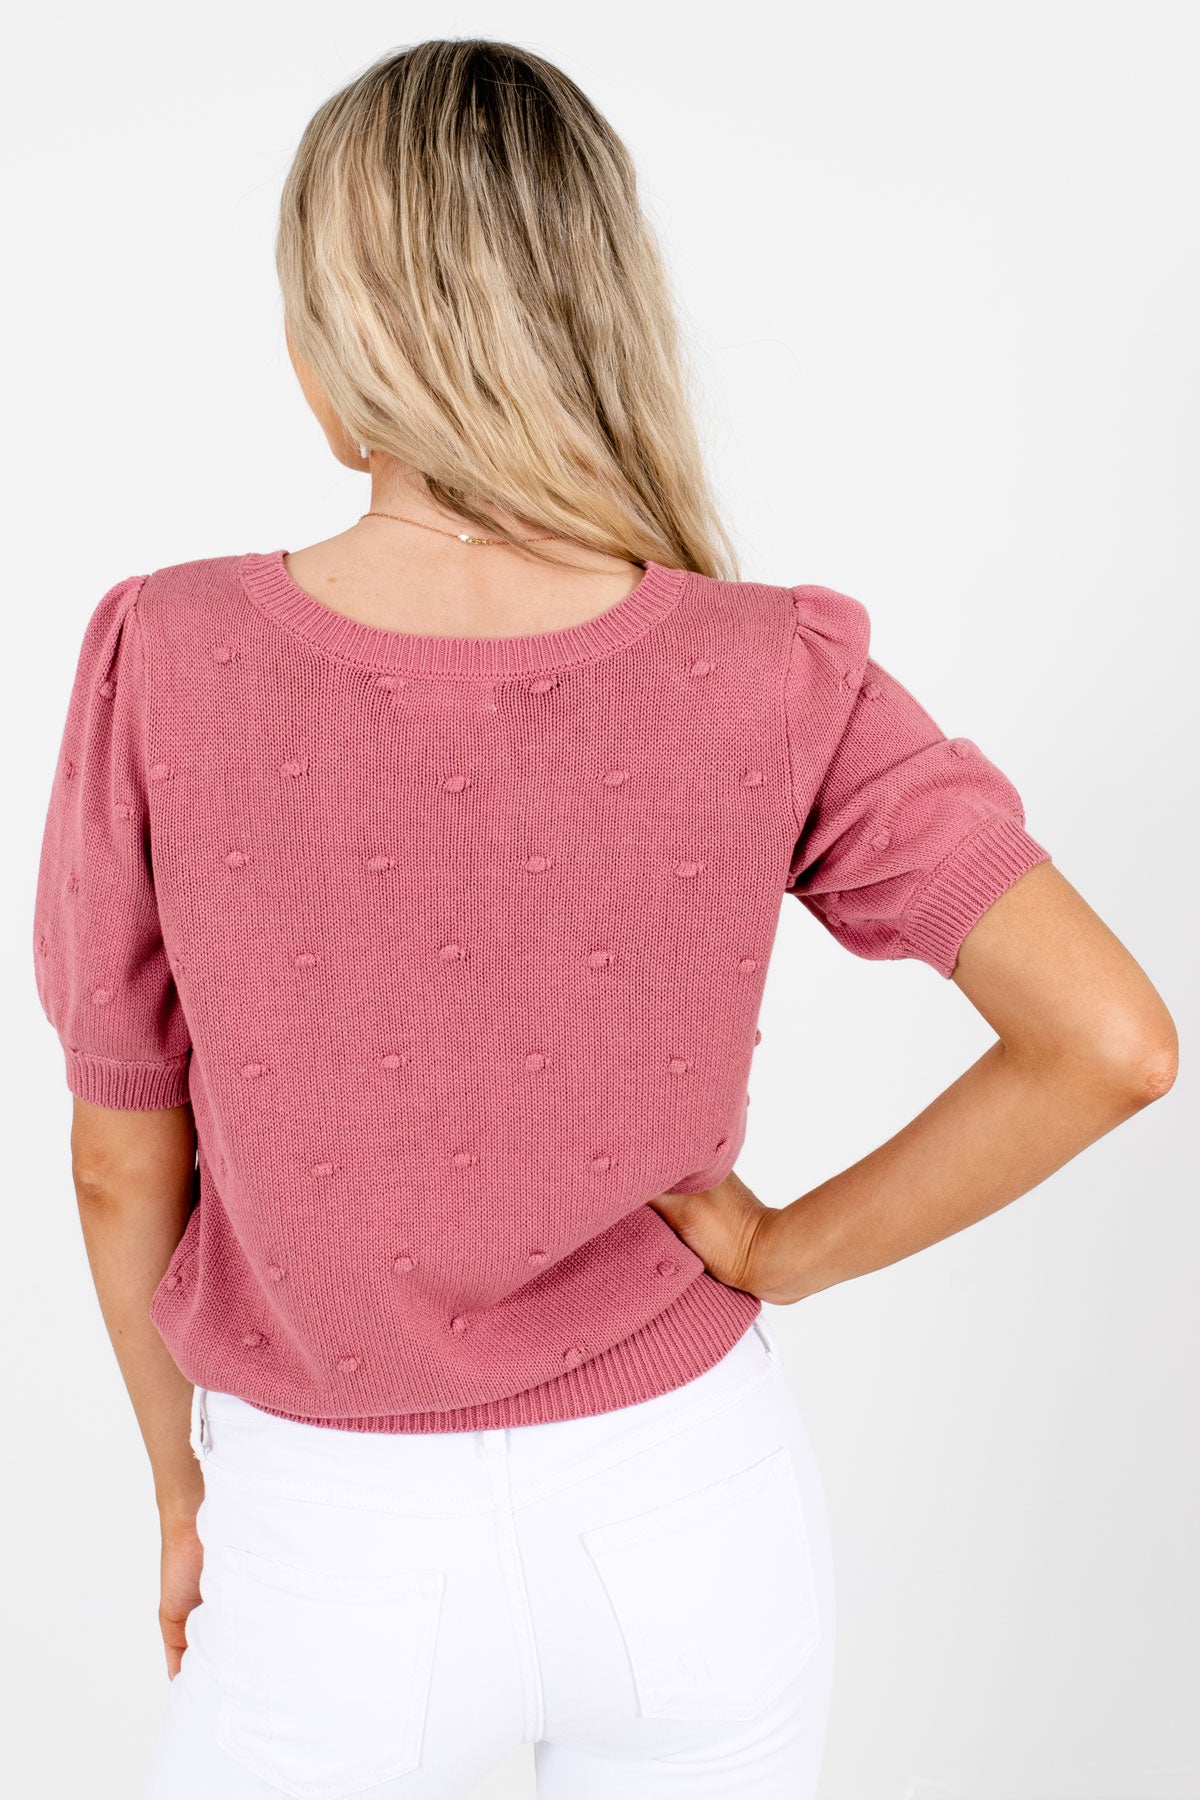 Women's Pink Polka Dot Textured Boutique Top